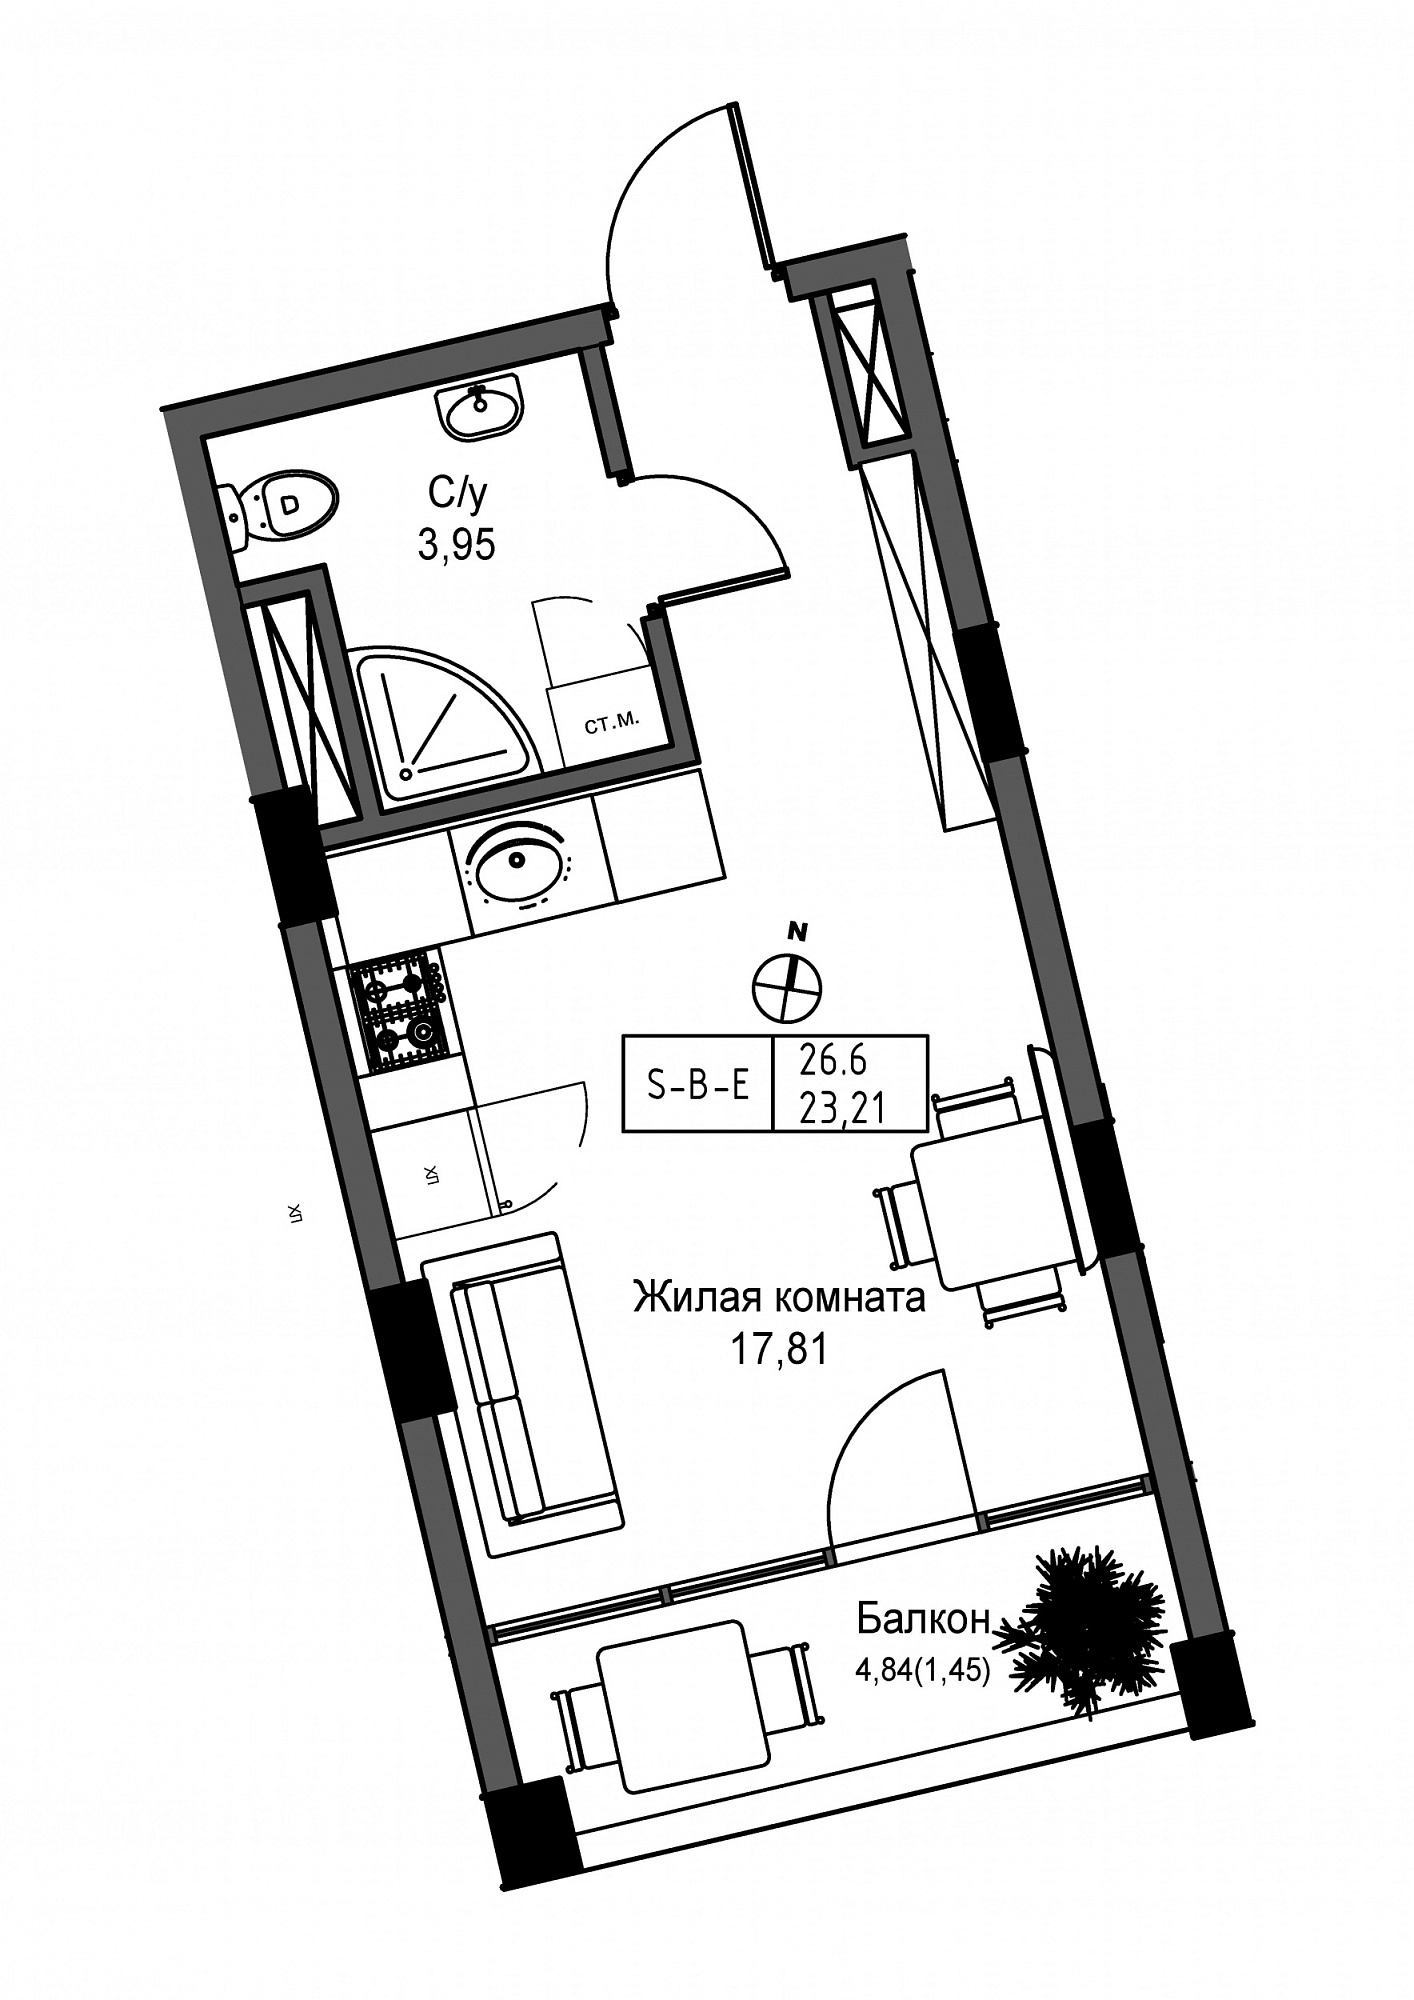 Planning Smart flats area 23.21m2, UM-004-04/0009.